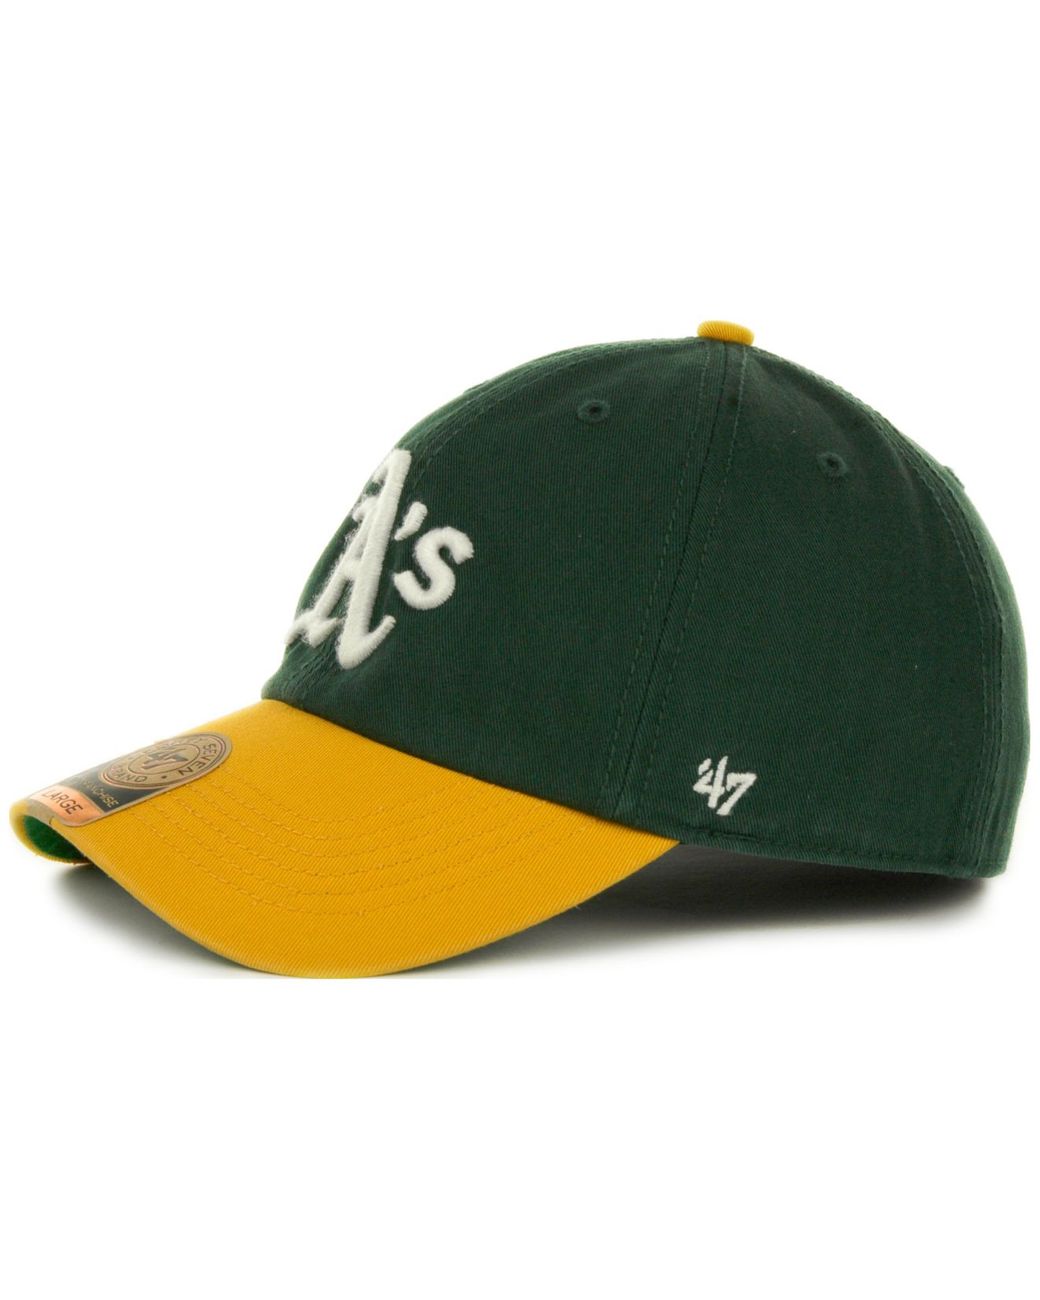 Hatstore Exclusive x Oakland Athletics The Classic 47 Captain MLB Snapback  - 47 Brand cap